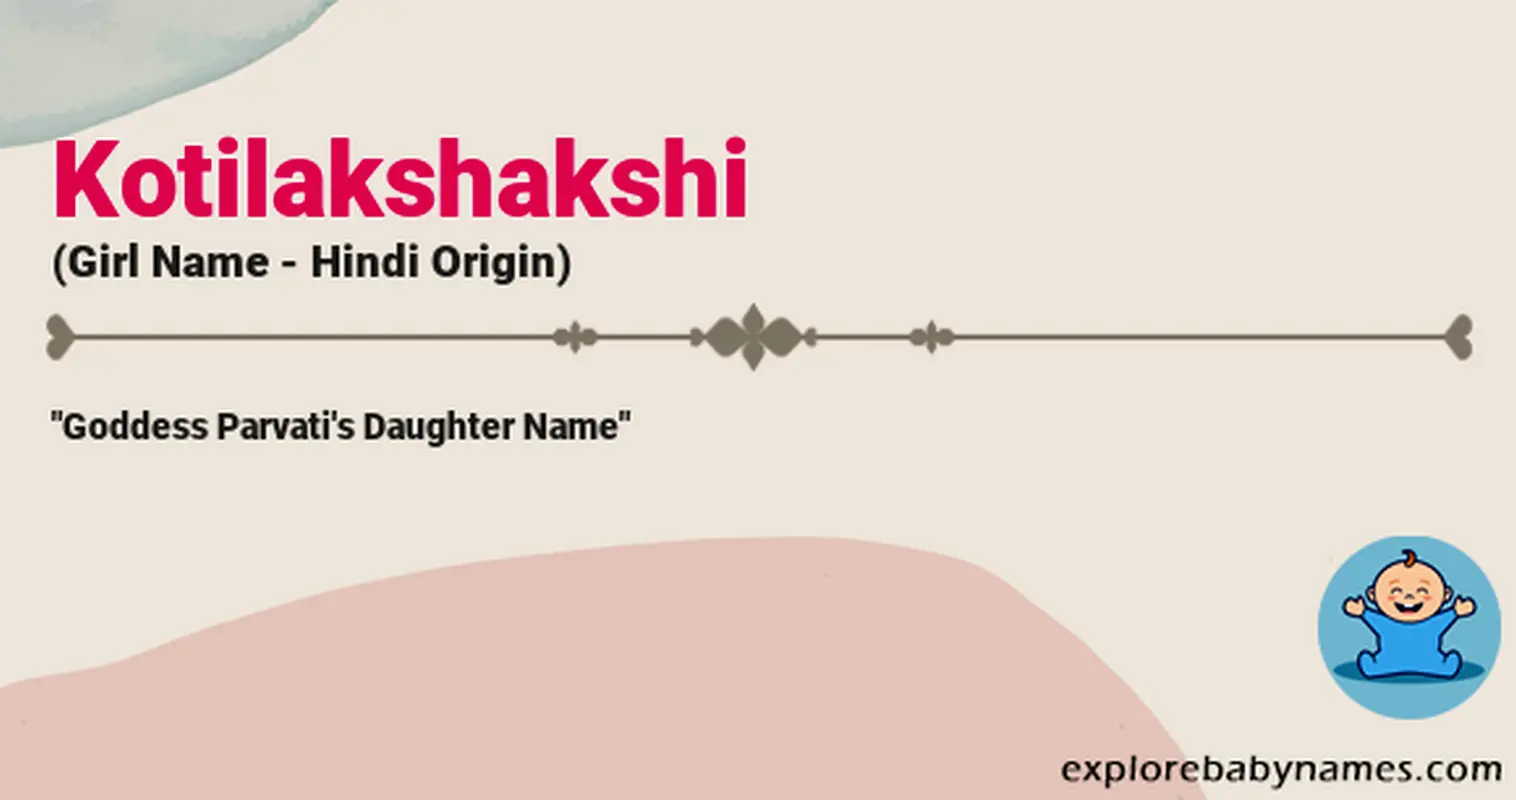 Meaning of Kotilakshakshi